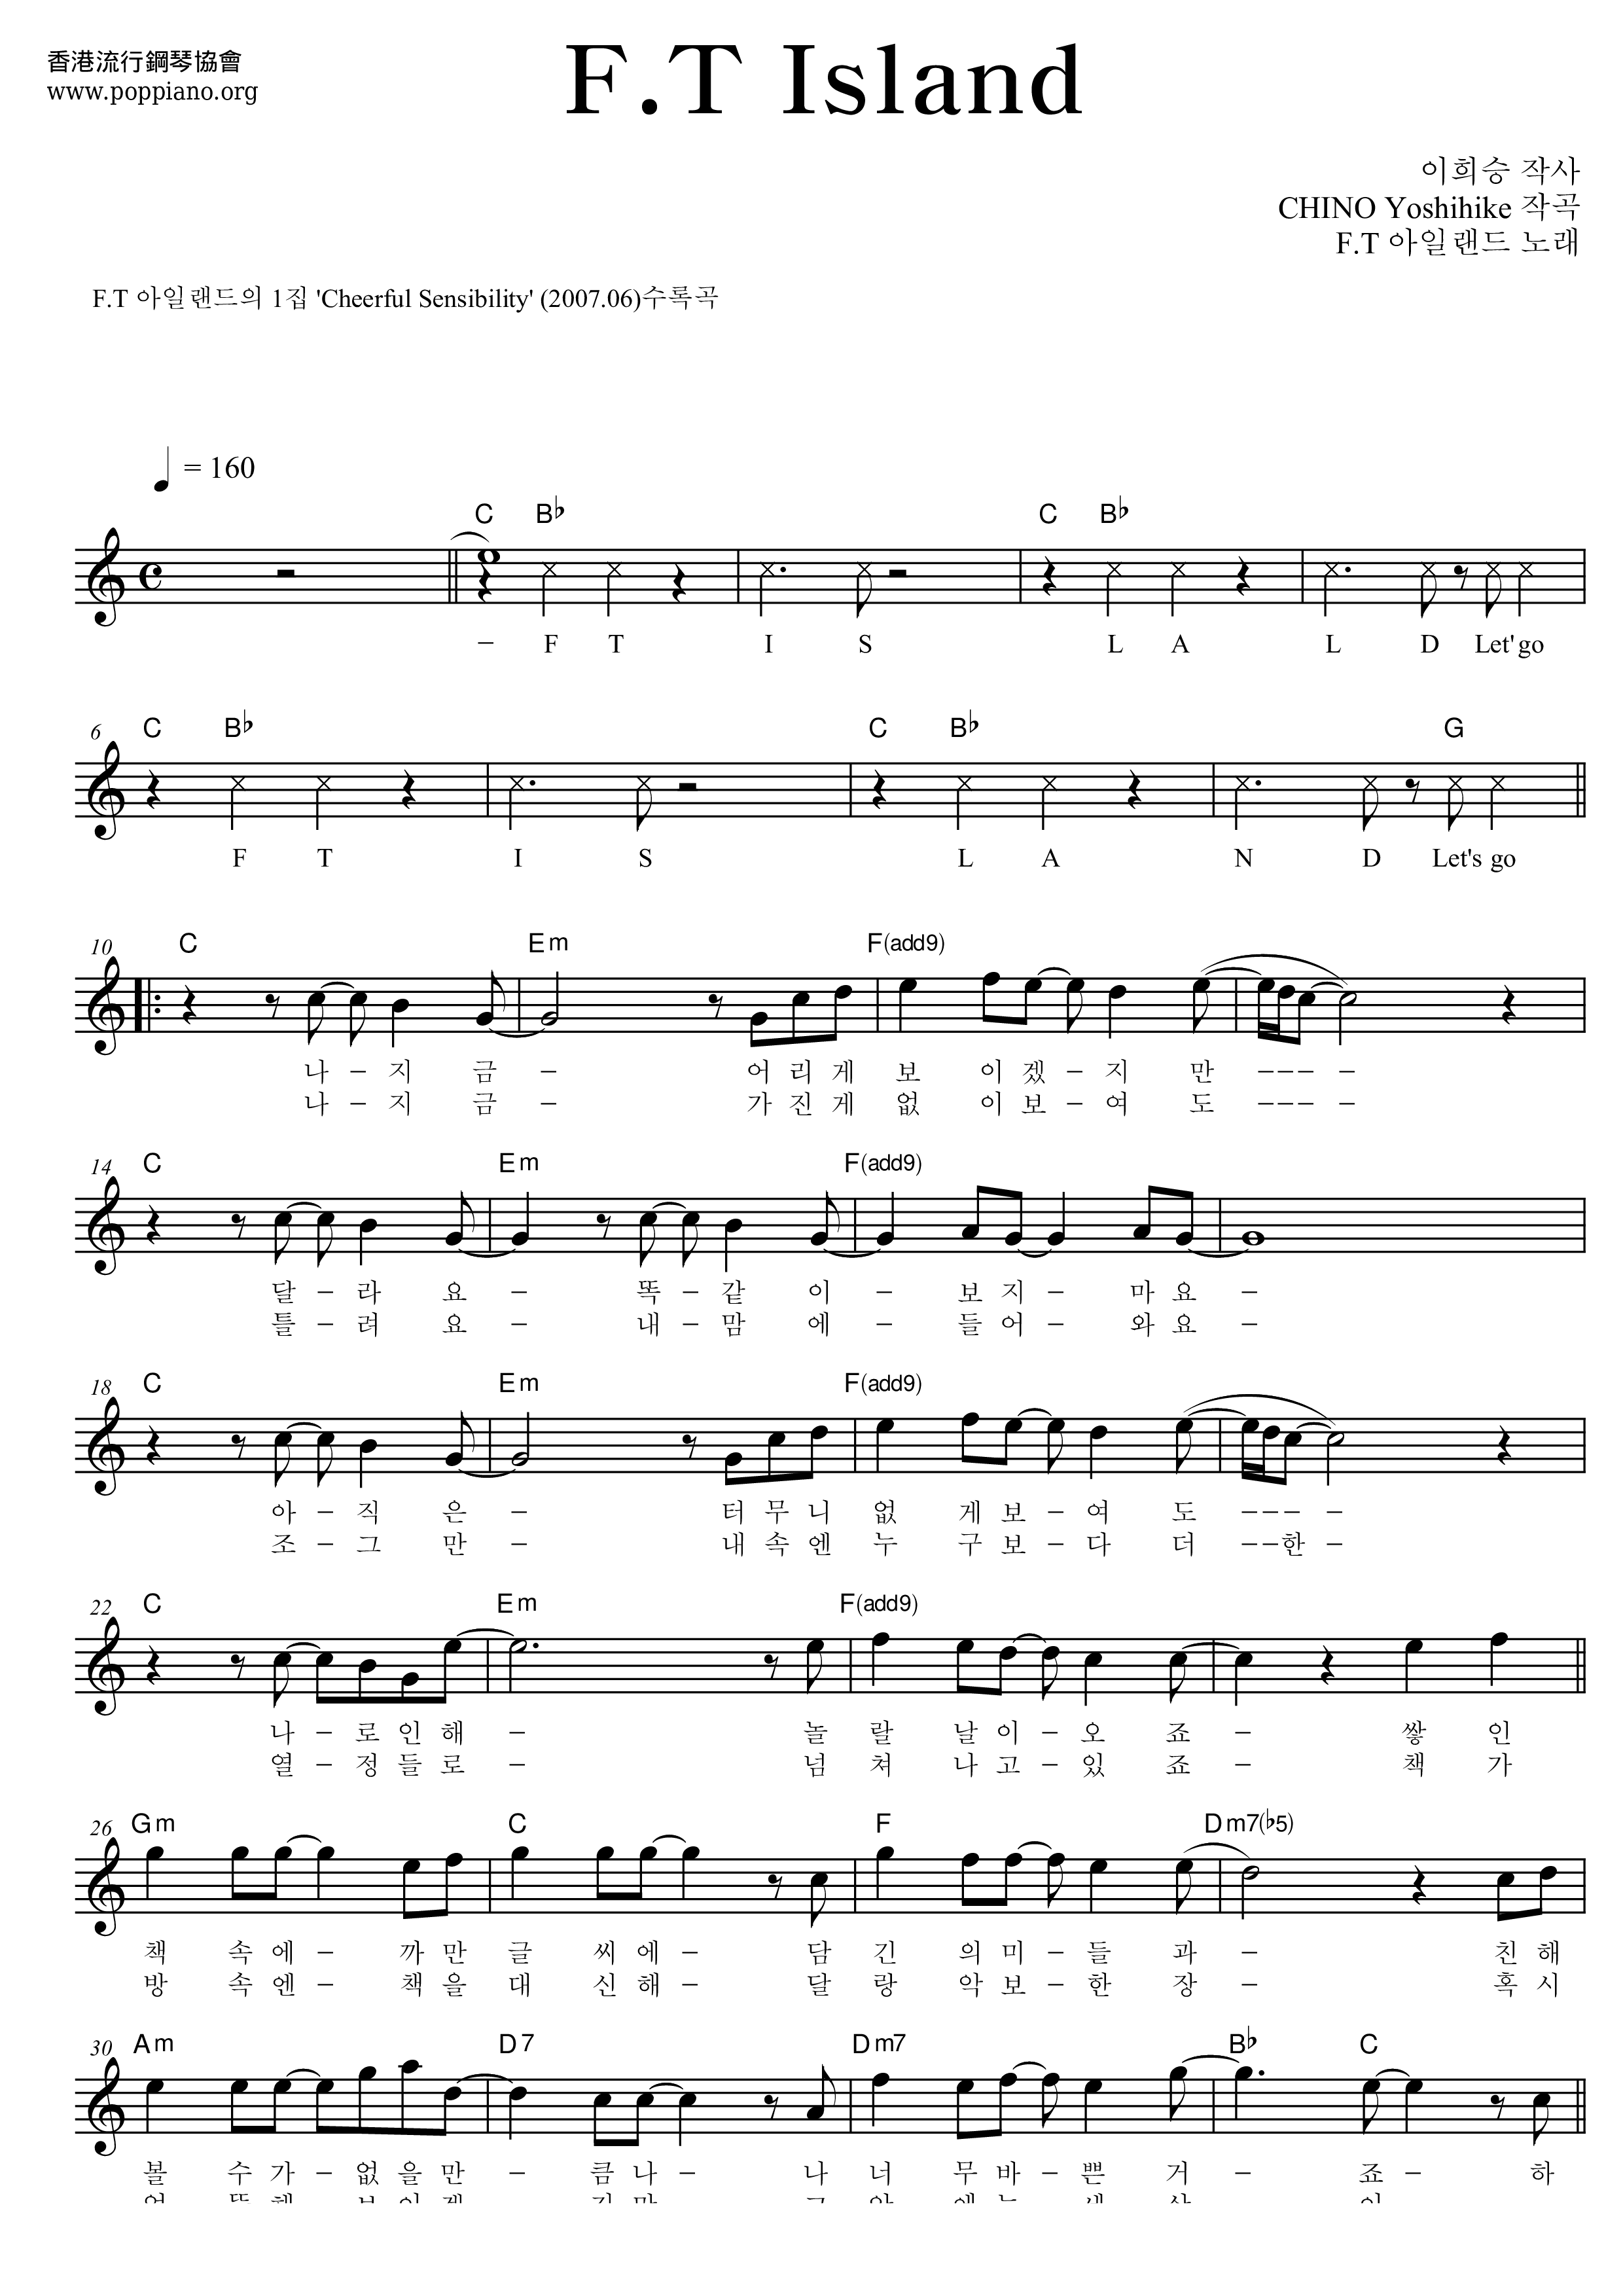 Cheerful Sensibility - FT ISLAND Score